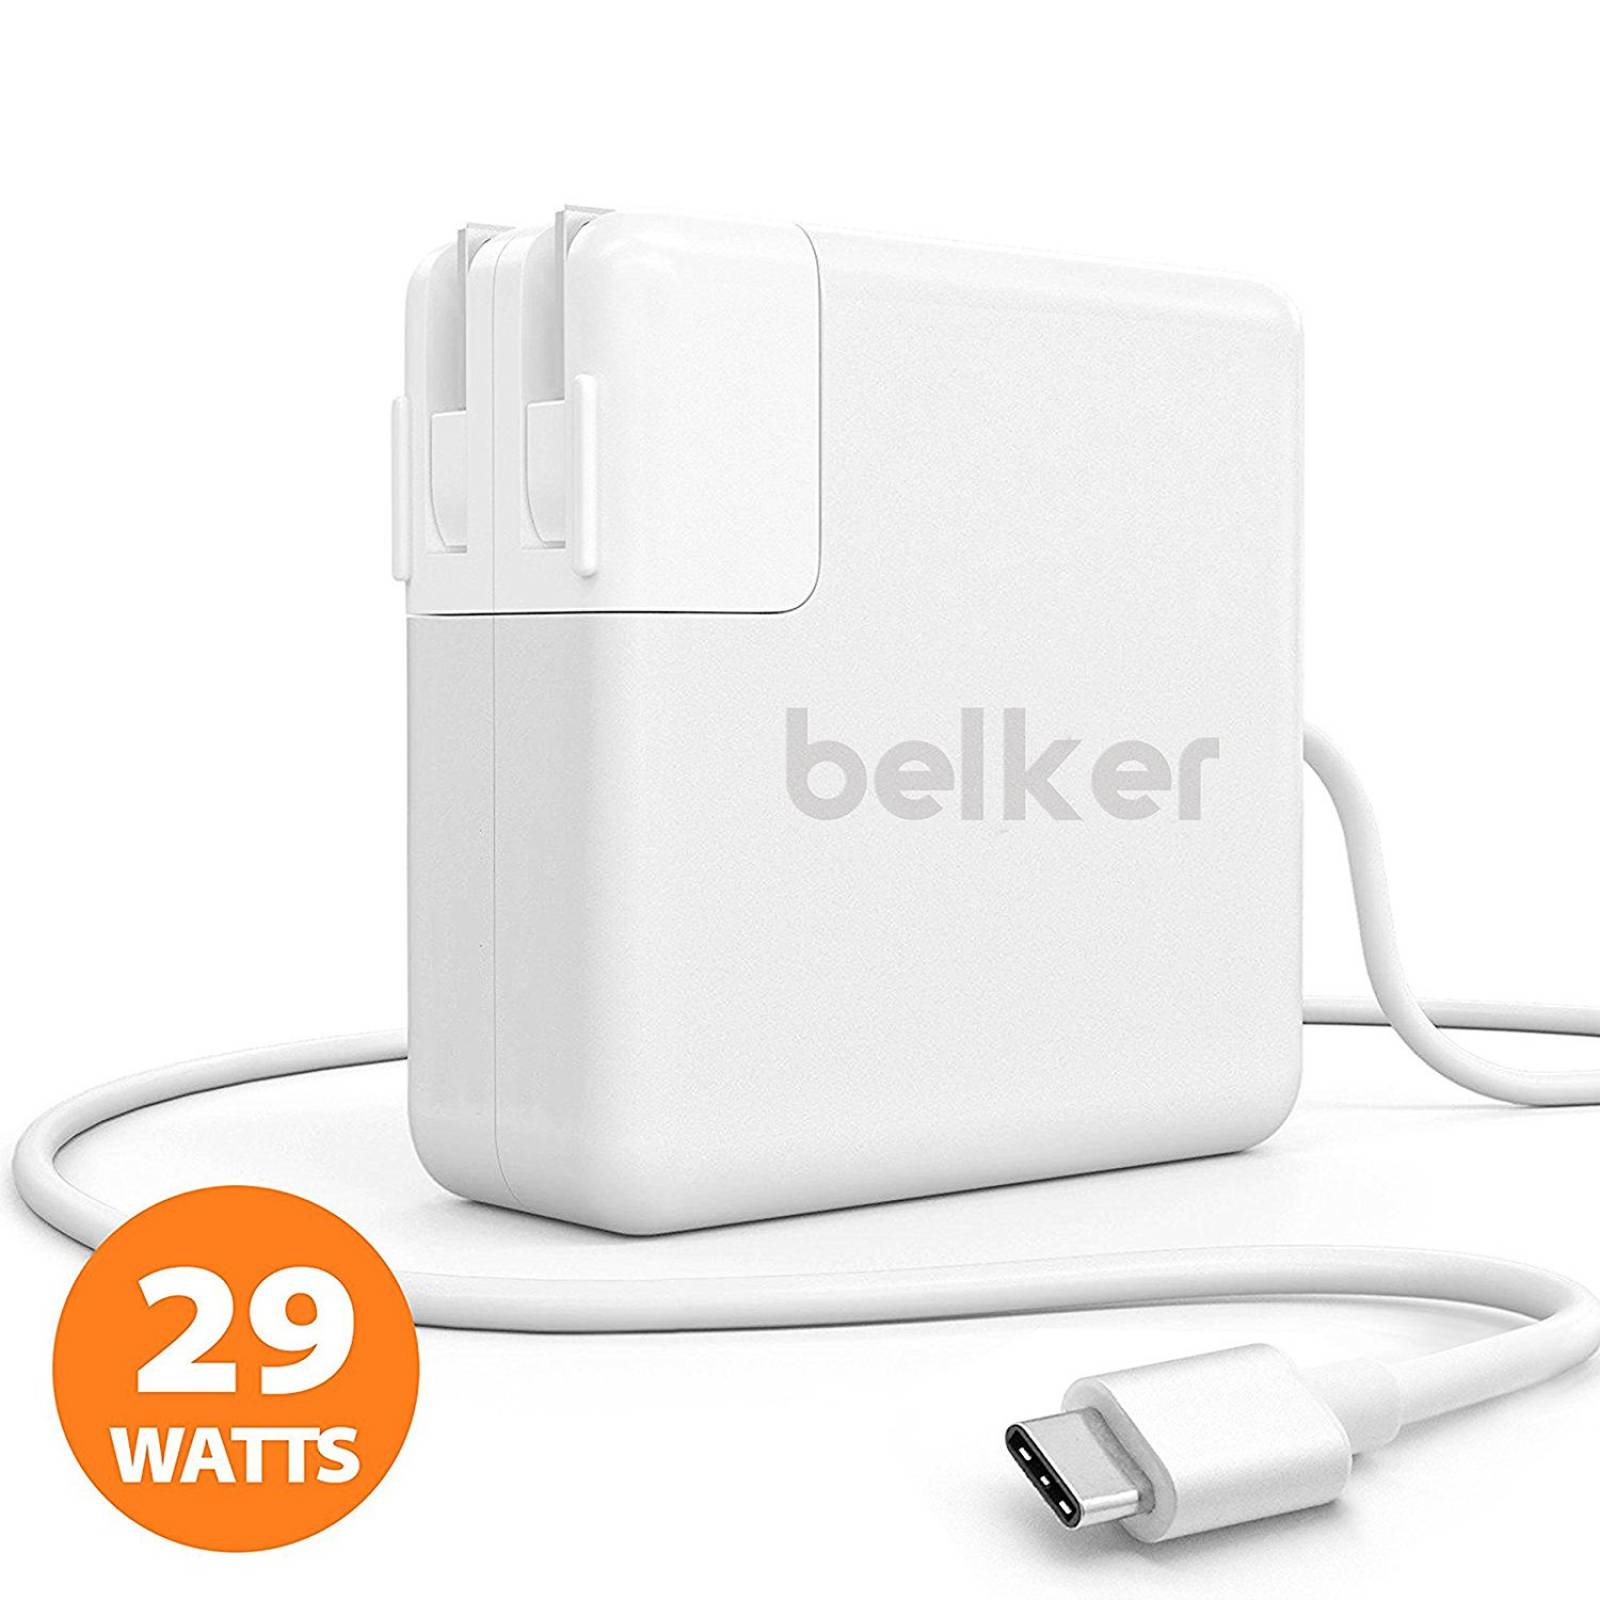 Cargador Belker Para Macbook 12- Pulgadas 2015, Usc-c, 29w